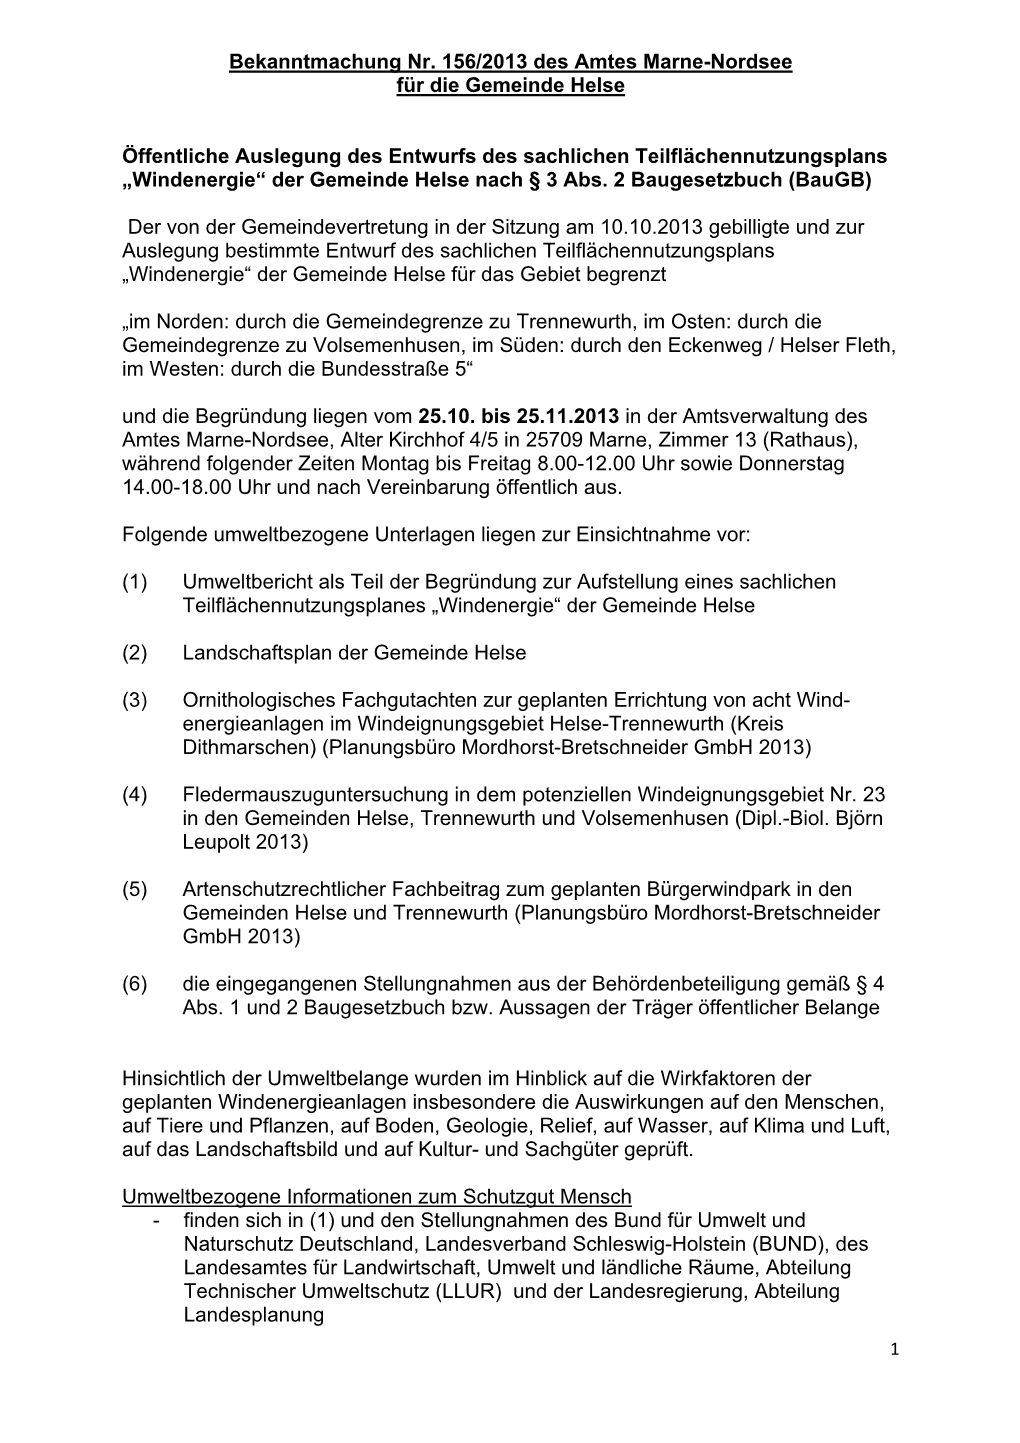 Bekanntmachung Nr. 156/2013 Des Amtes Marne-Nordsee Für Die Gemeinde Helse